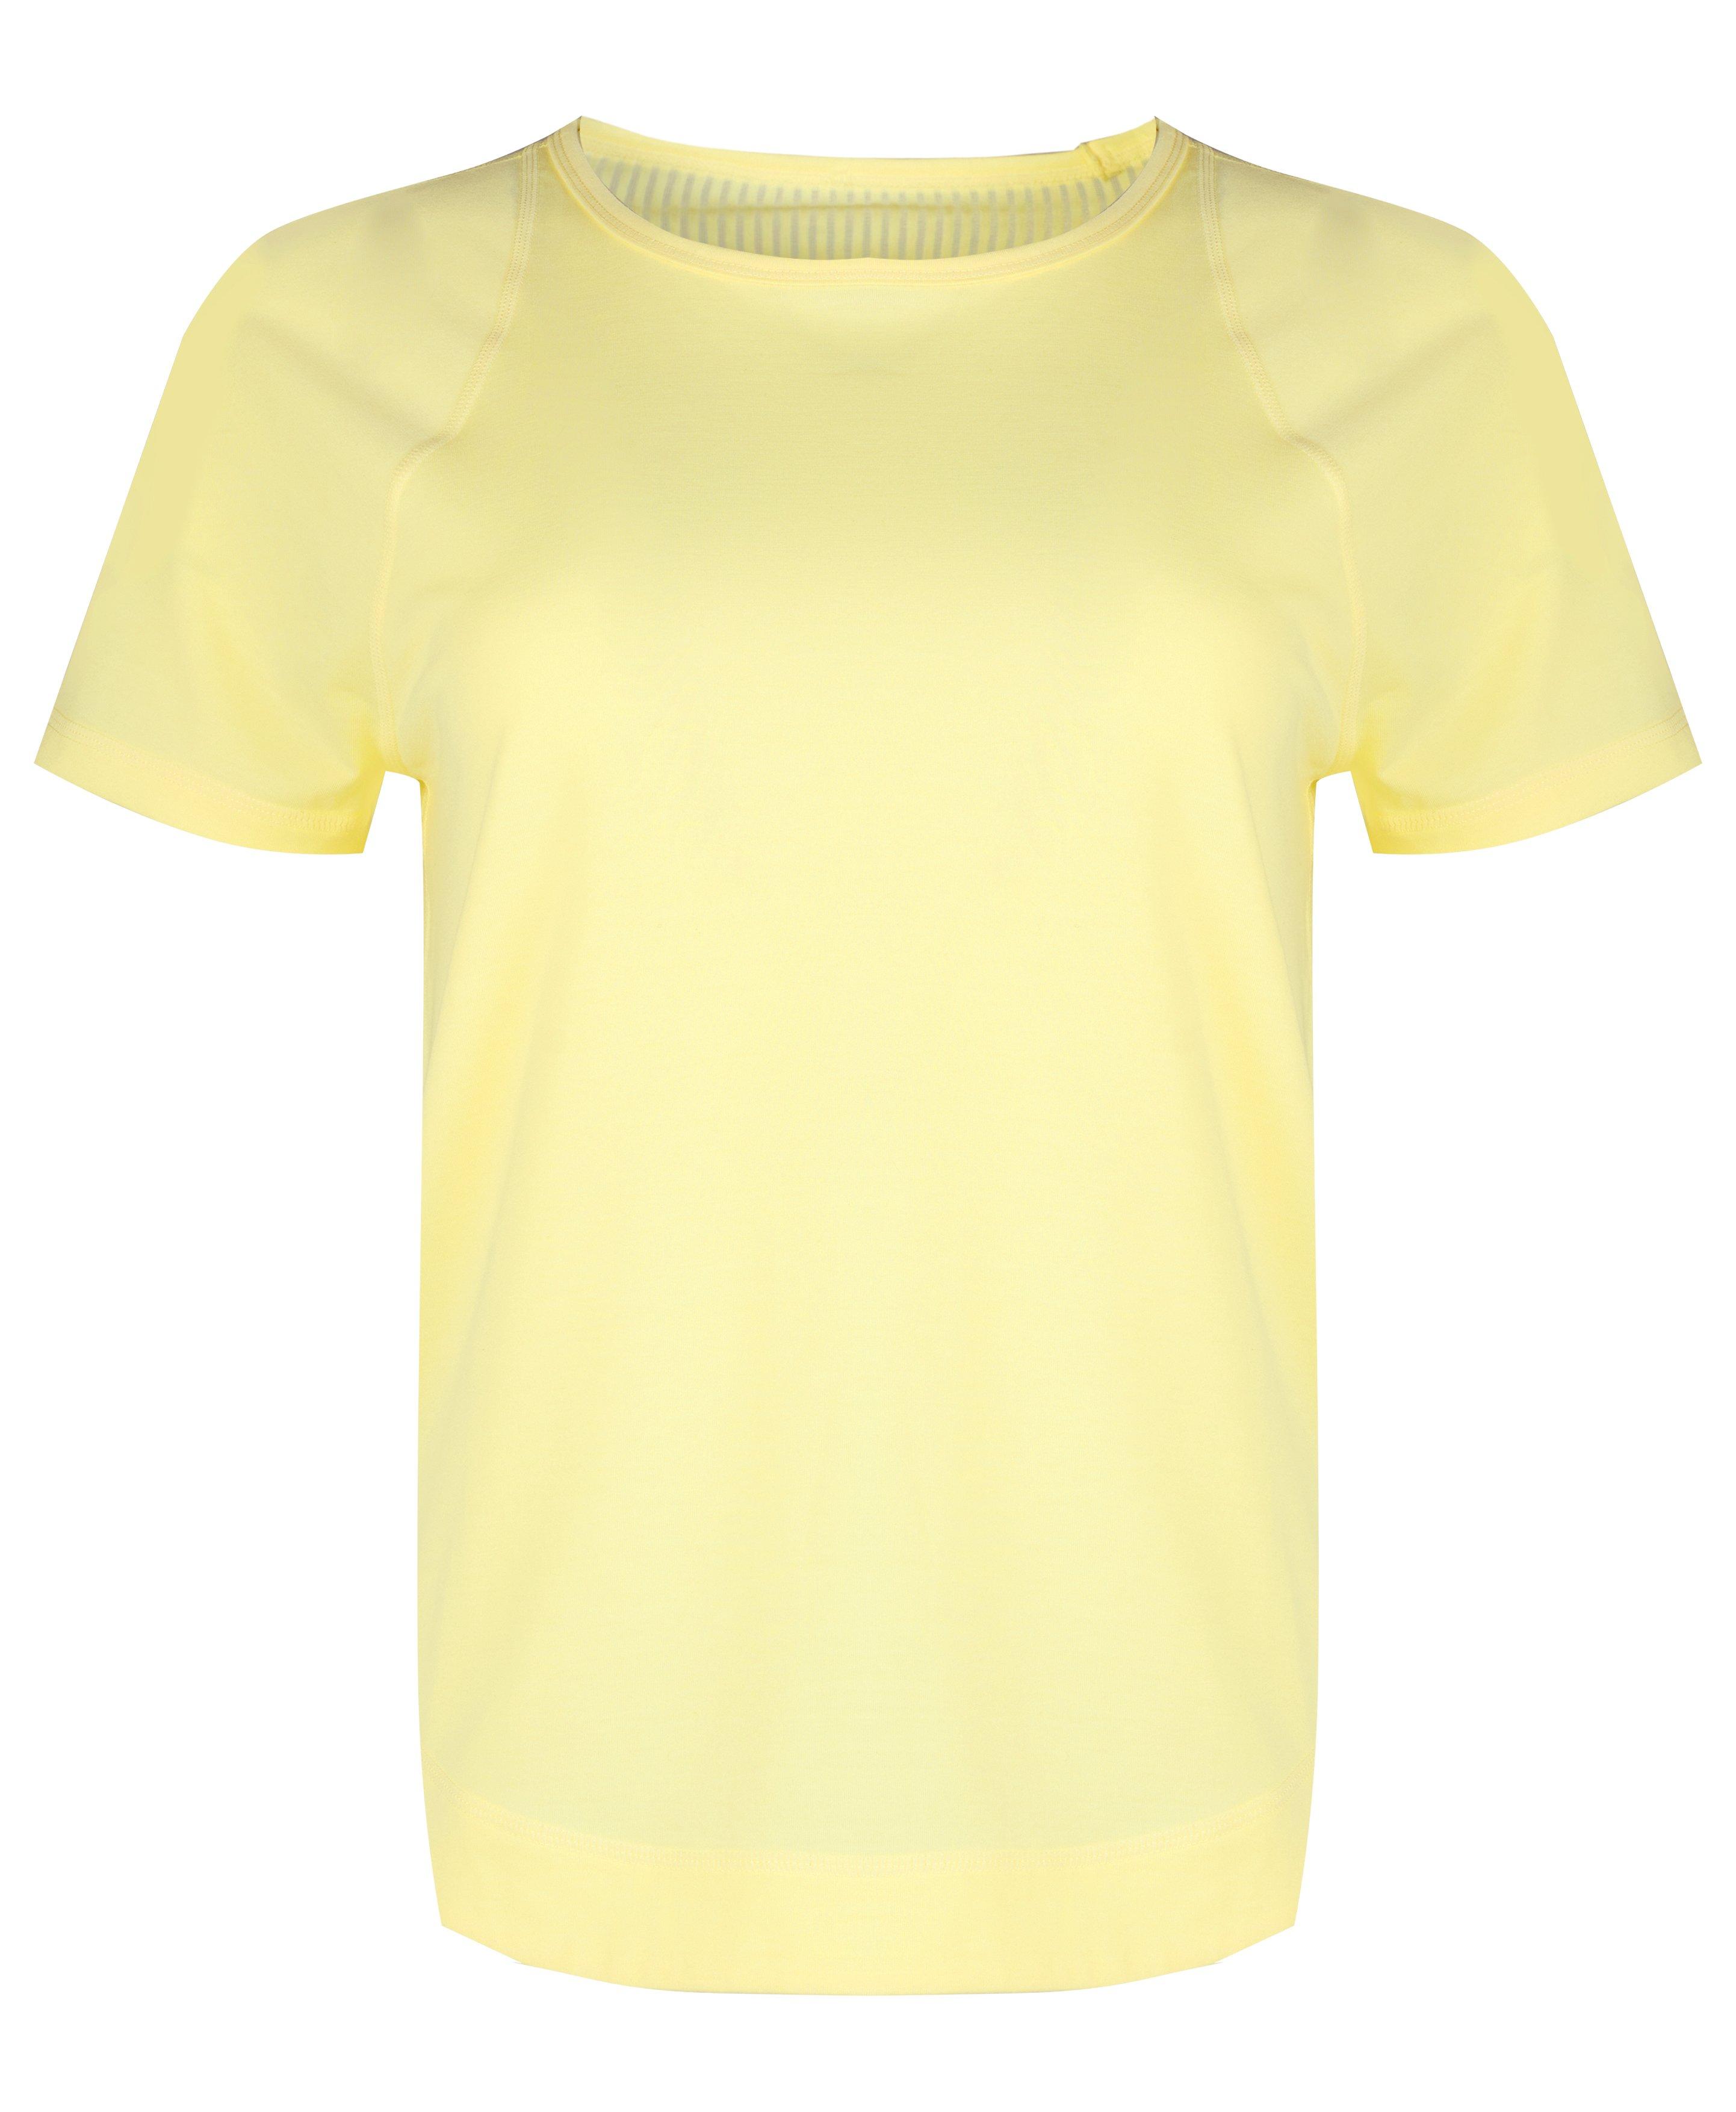 Breathe Easy Running Short Sleeve Top - Waterlily Yellow | Women's